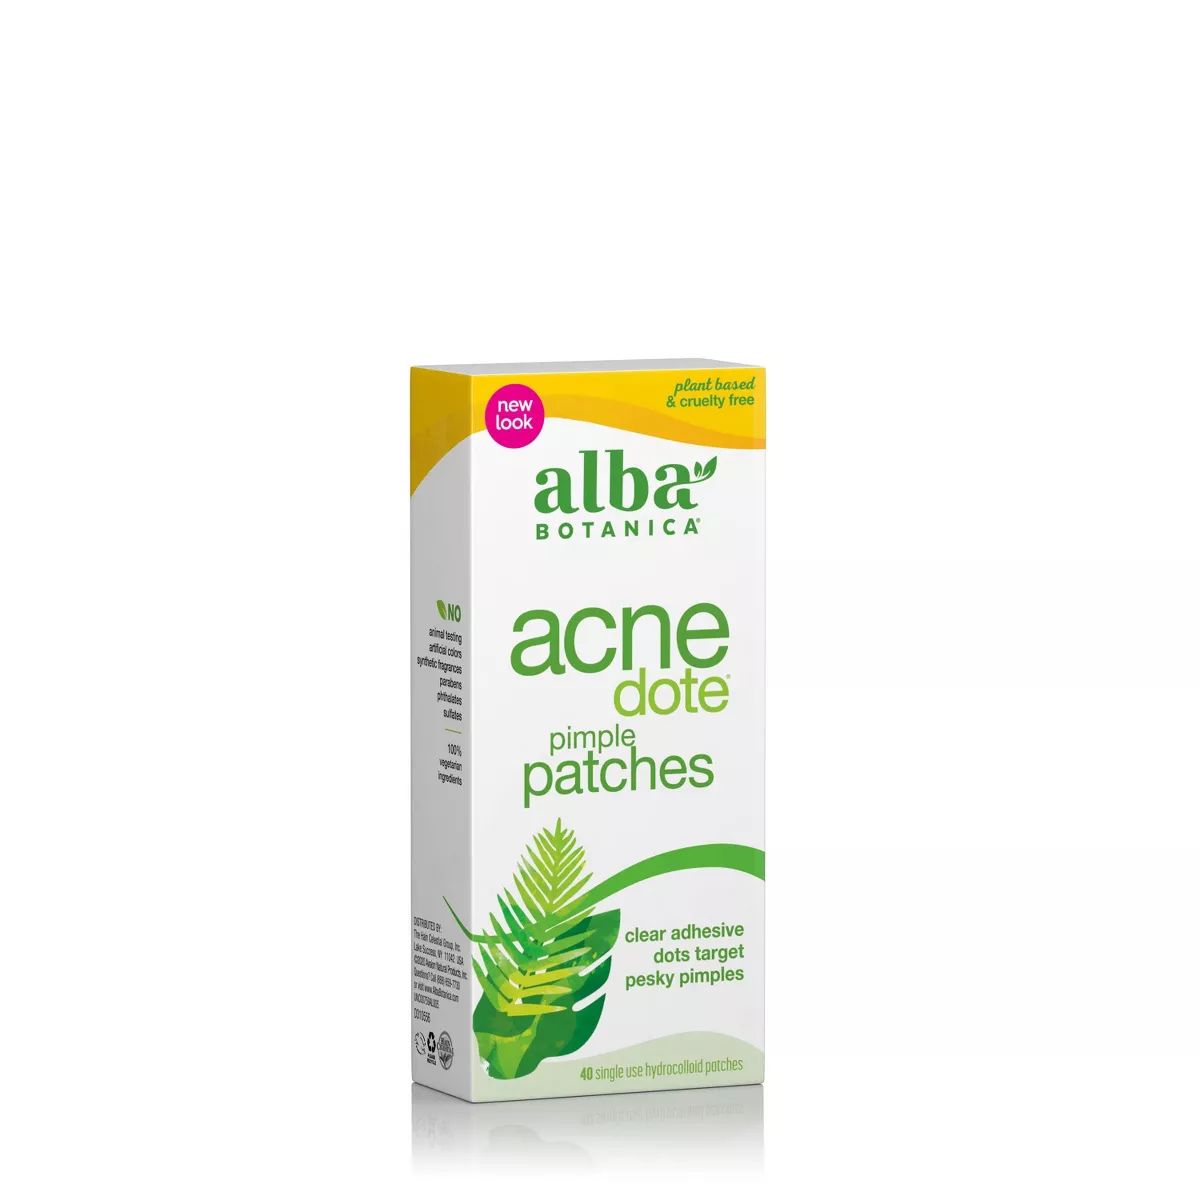 Alba Botanica Acne Pimple Patch - 40ct | Target